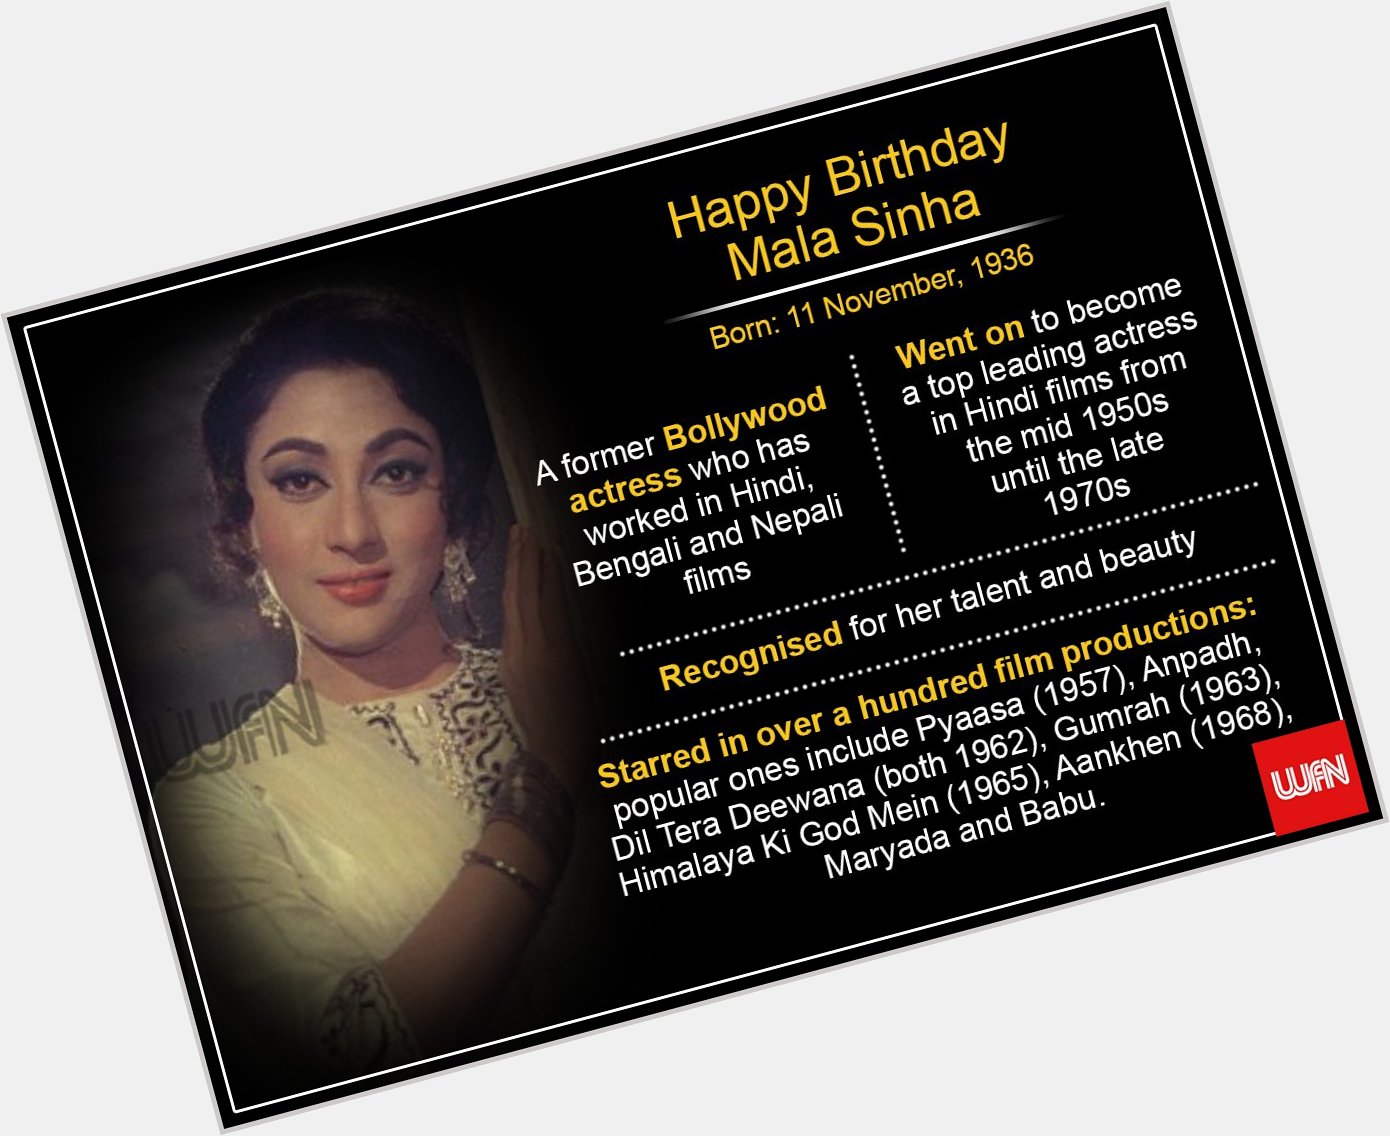 Wish you a very happy birthday Mala Sinha  